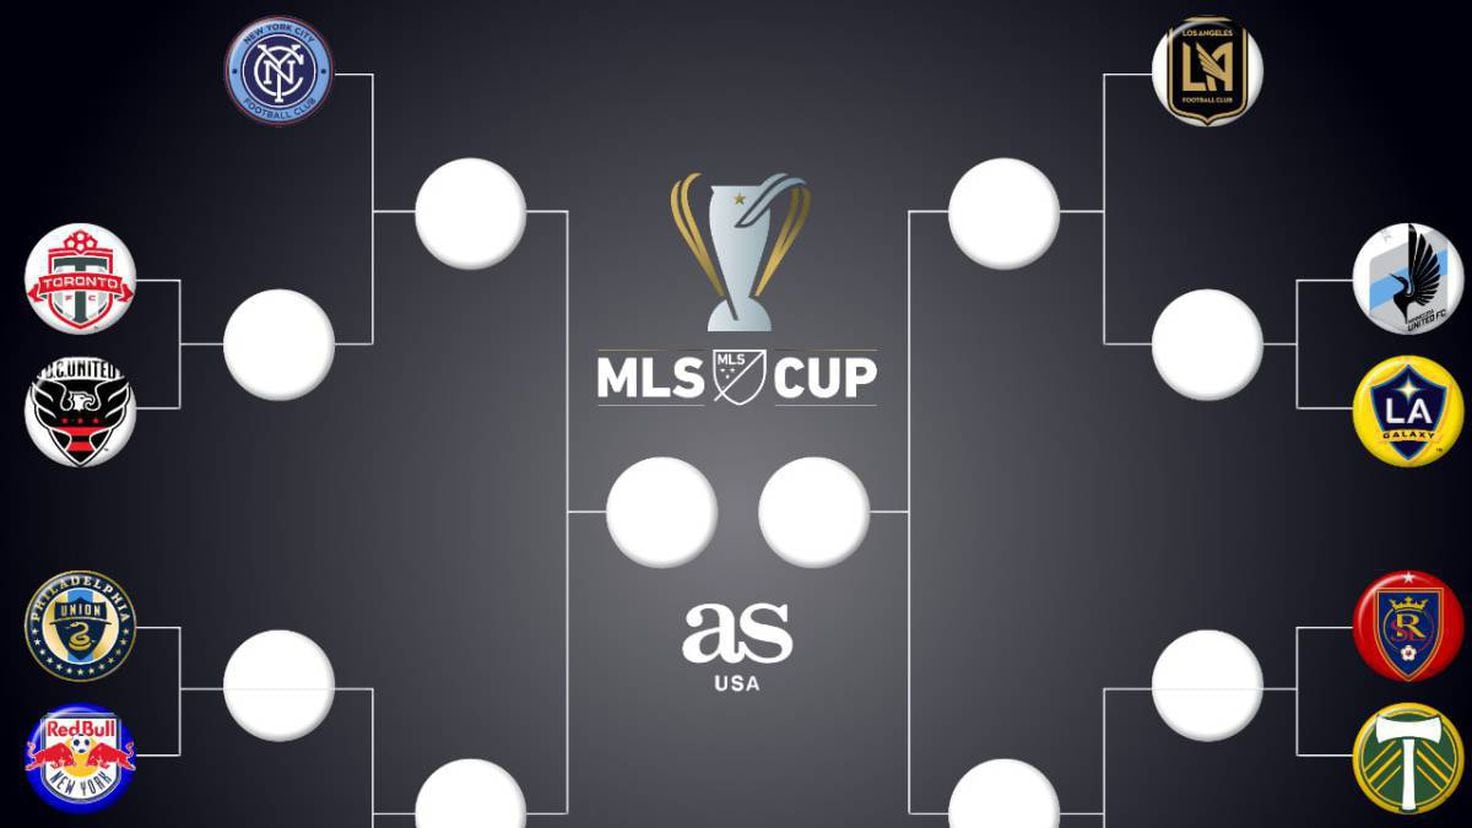 MLS playoff bracket defined AS USA